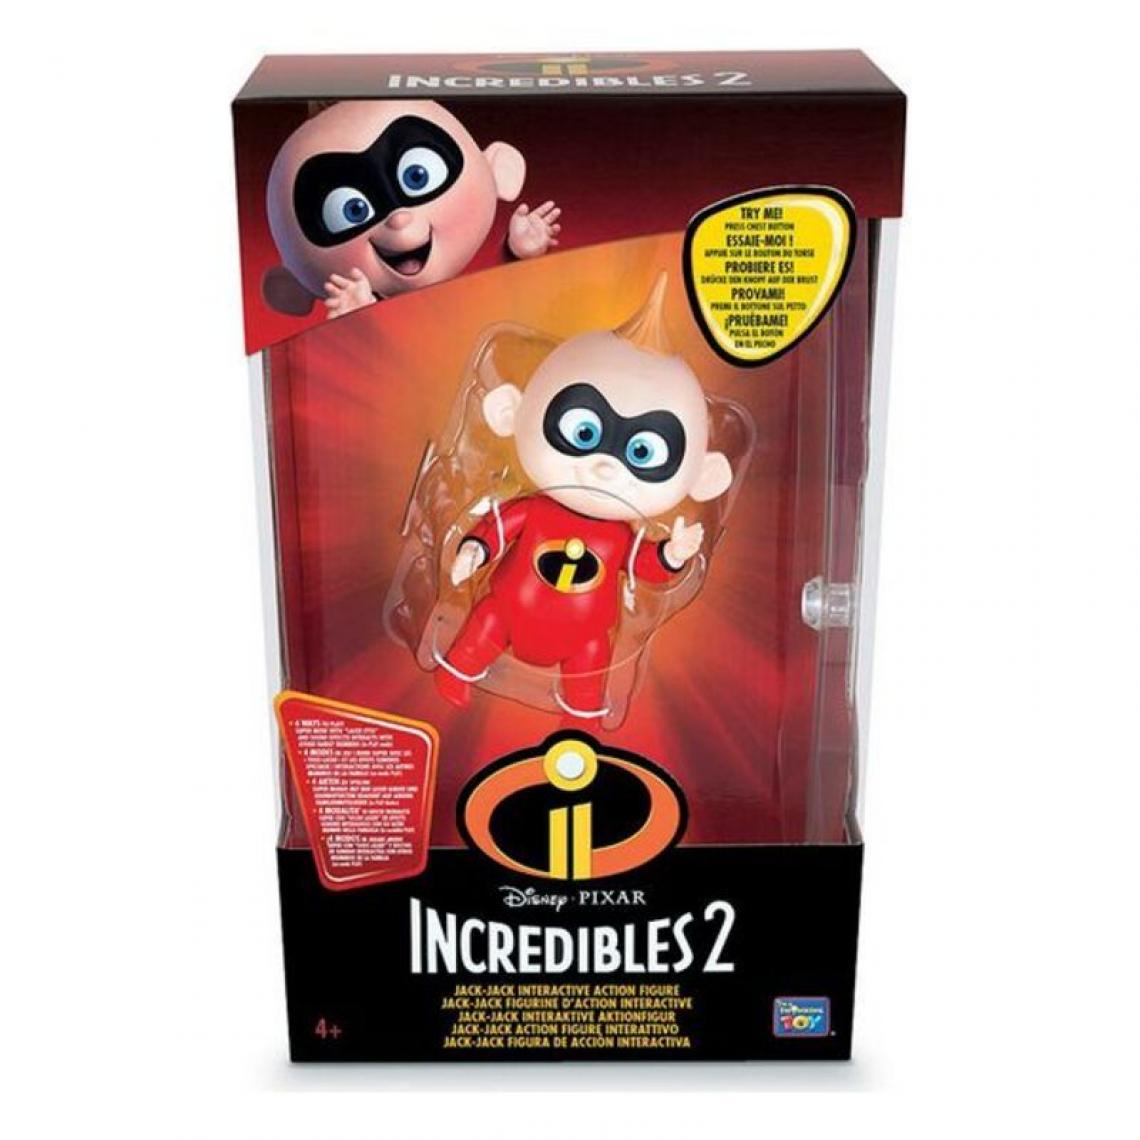 Inconnu - Figurine Jack Jack Incredible Bizak 114393 - Films et séries